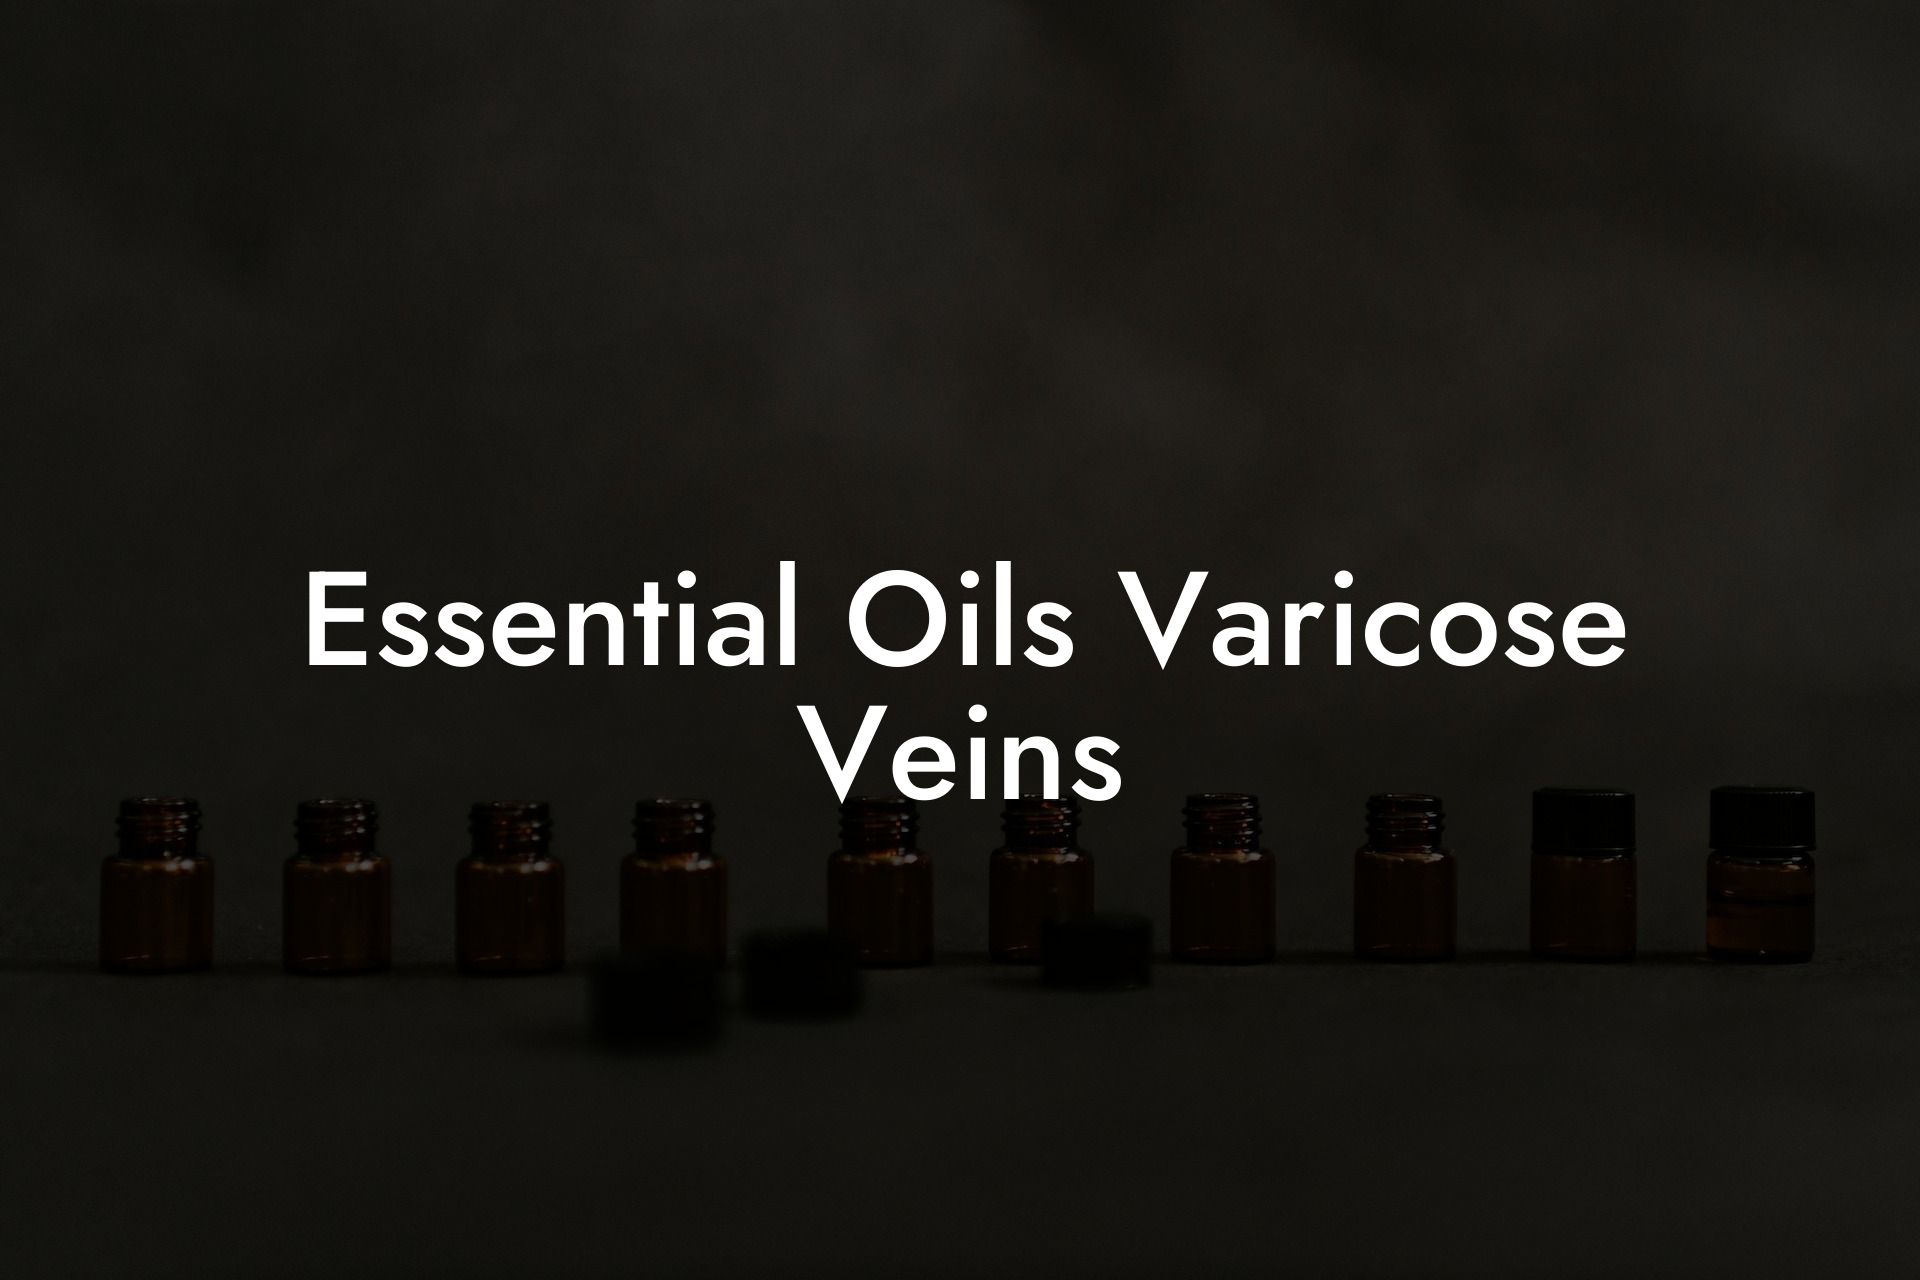 Essential Oils Varicose Veins